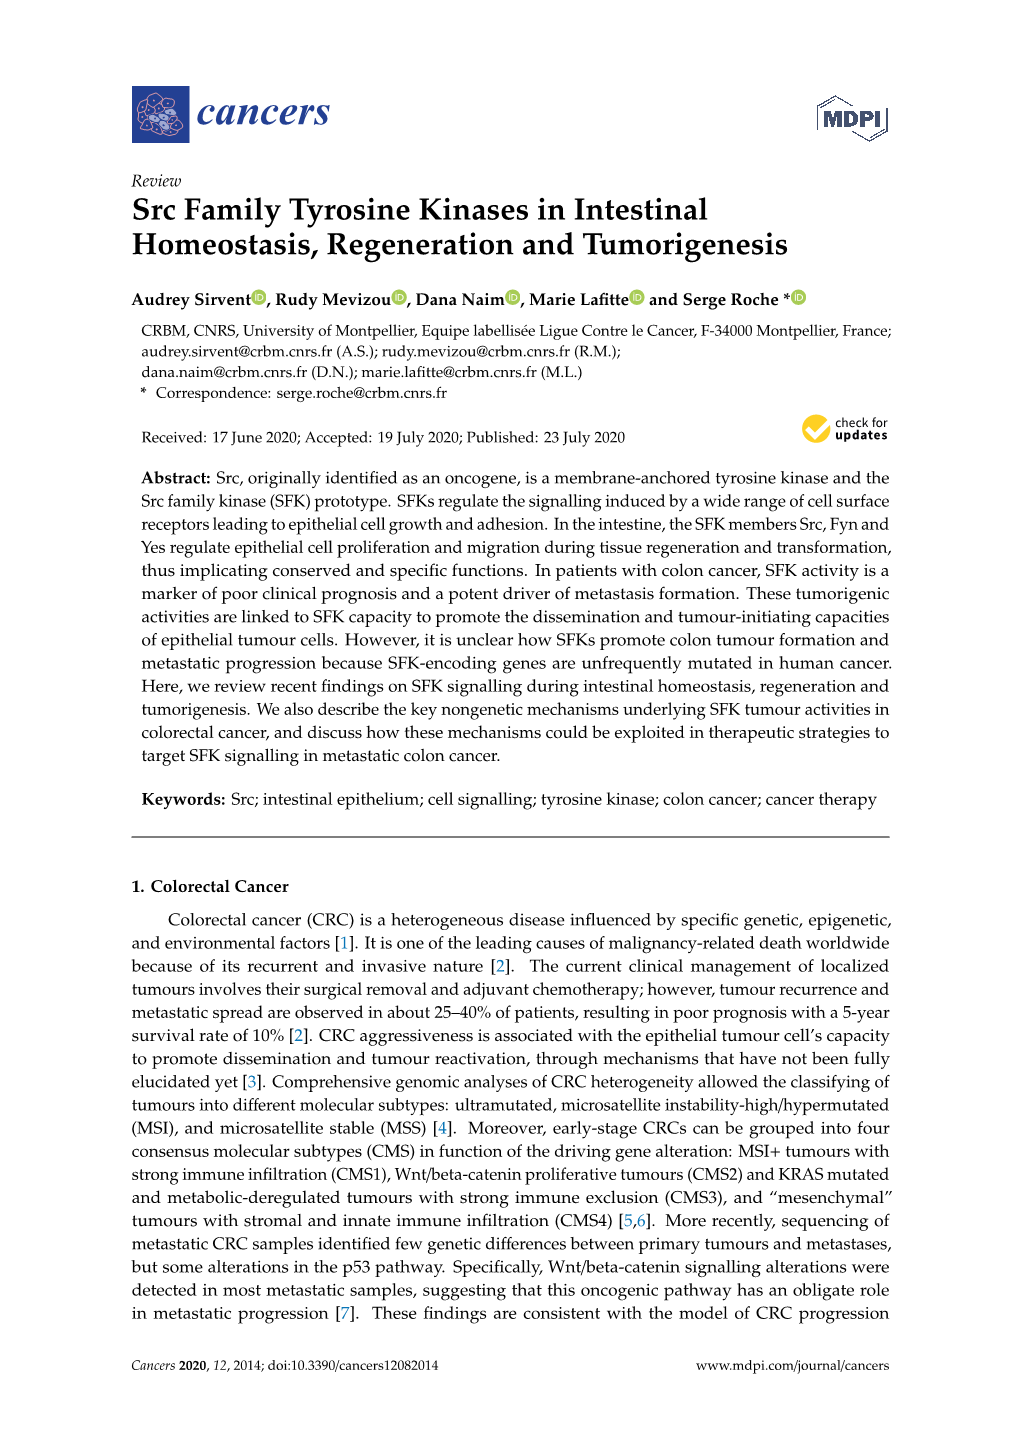 Src Family Tyrosine Kinases in Intestinal Homeostasis, Regeneration and Tumorigenesis